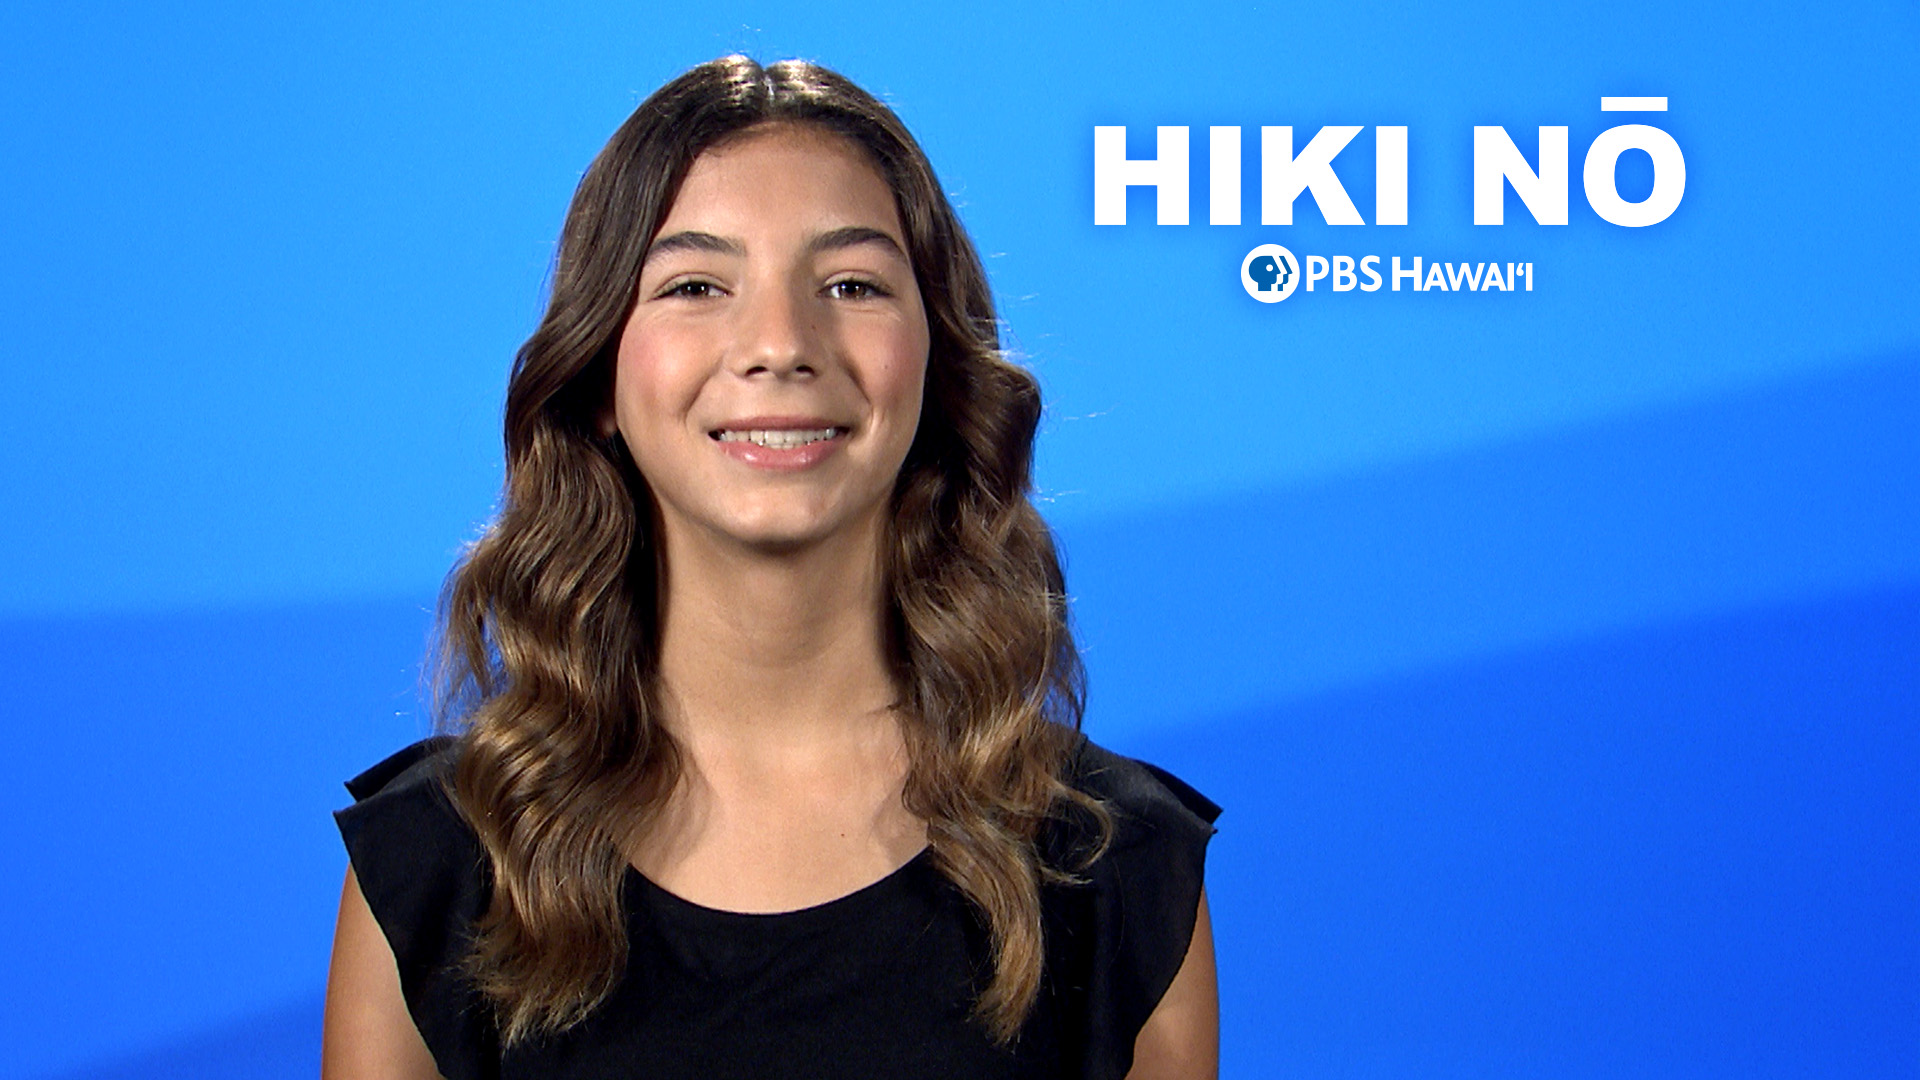 HIKI NŌ ON PBS HAWAIʻI: Believe it or Not, I Care